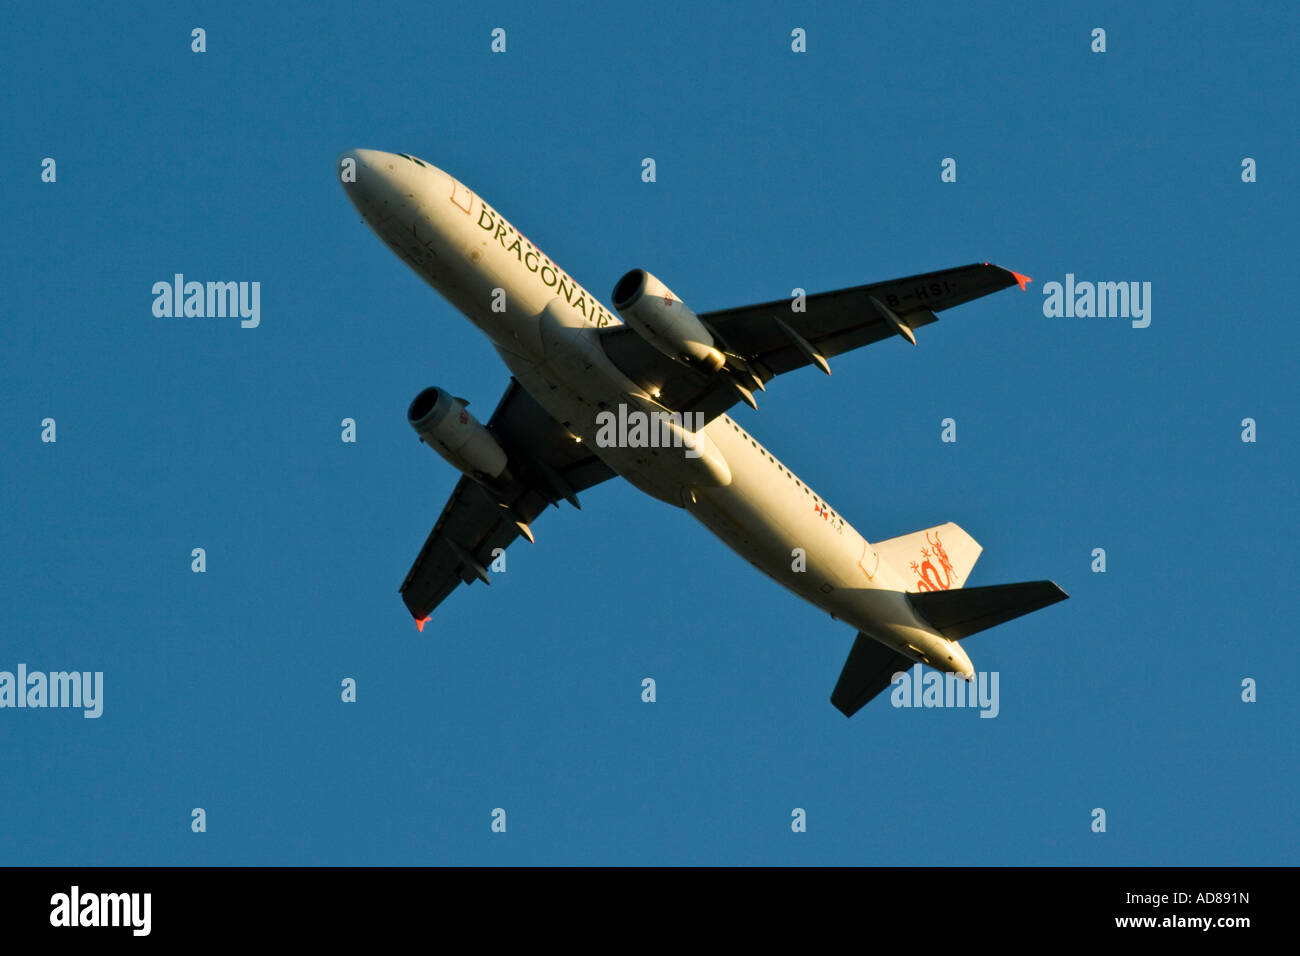 Dragonair Airline Airbus A320 Flugzeug im Flug kurz nach dem Start Stockfoto